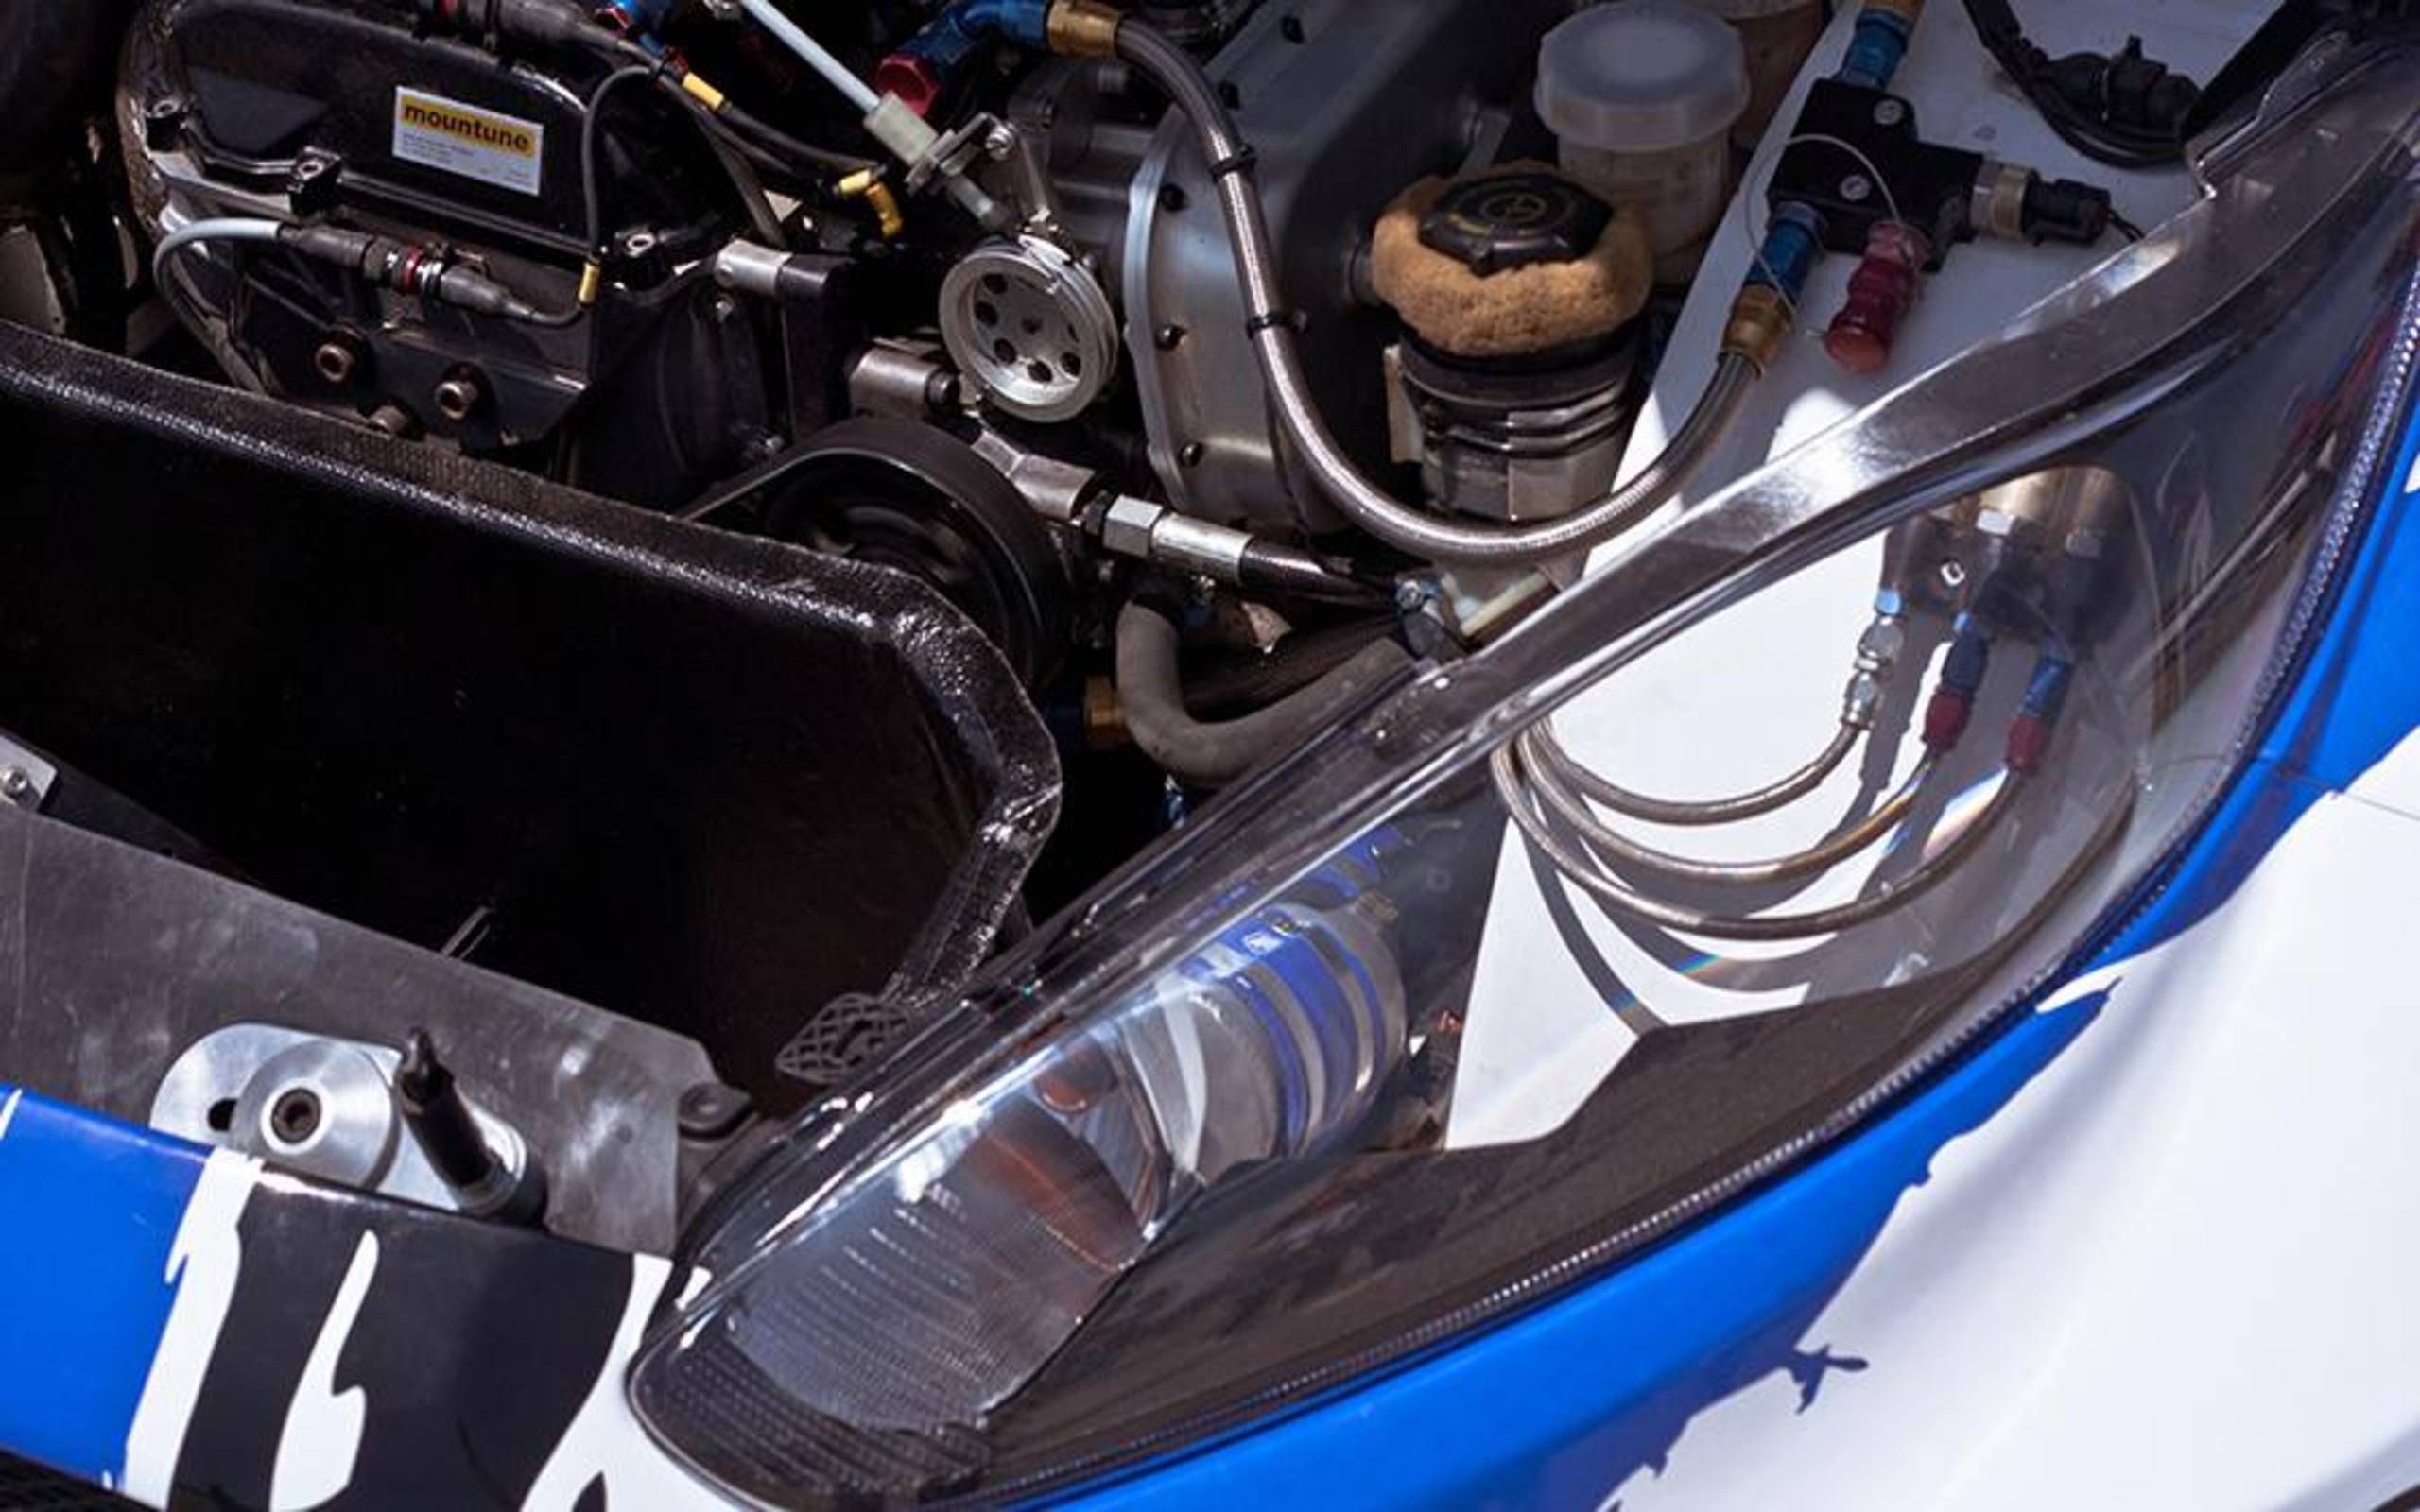 Build of the week - 4G63 Mk7 Ford Fiesta - Link Engine Management